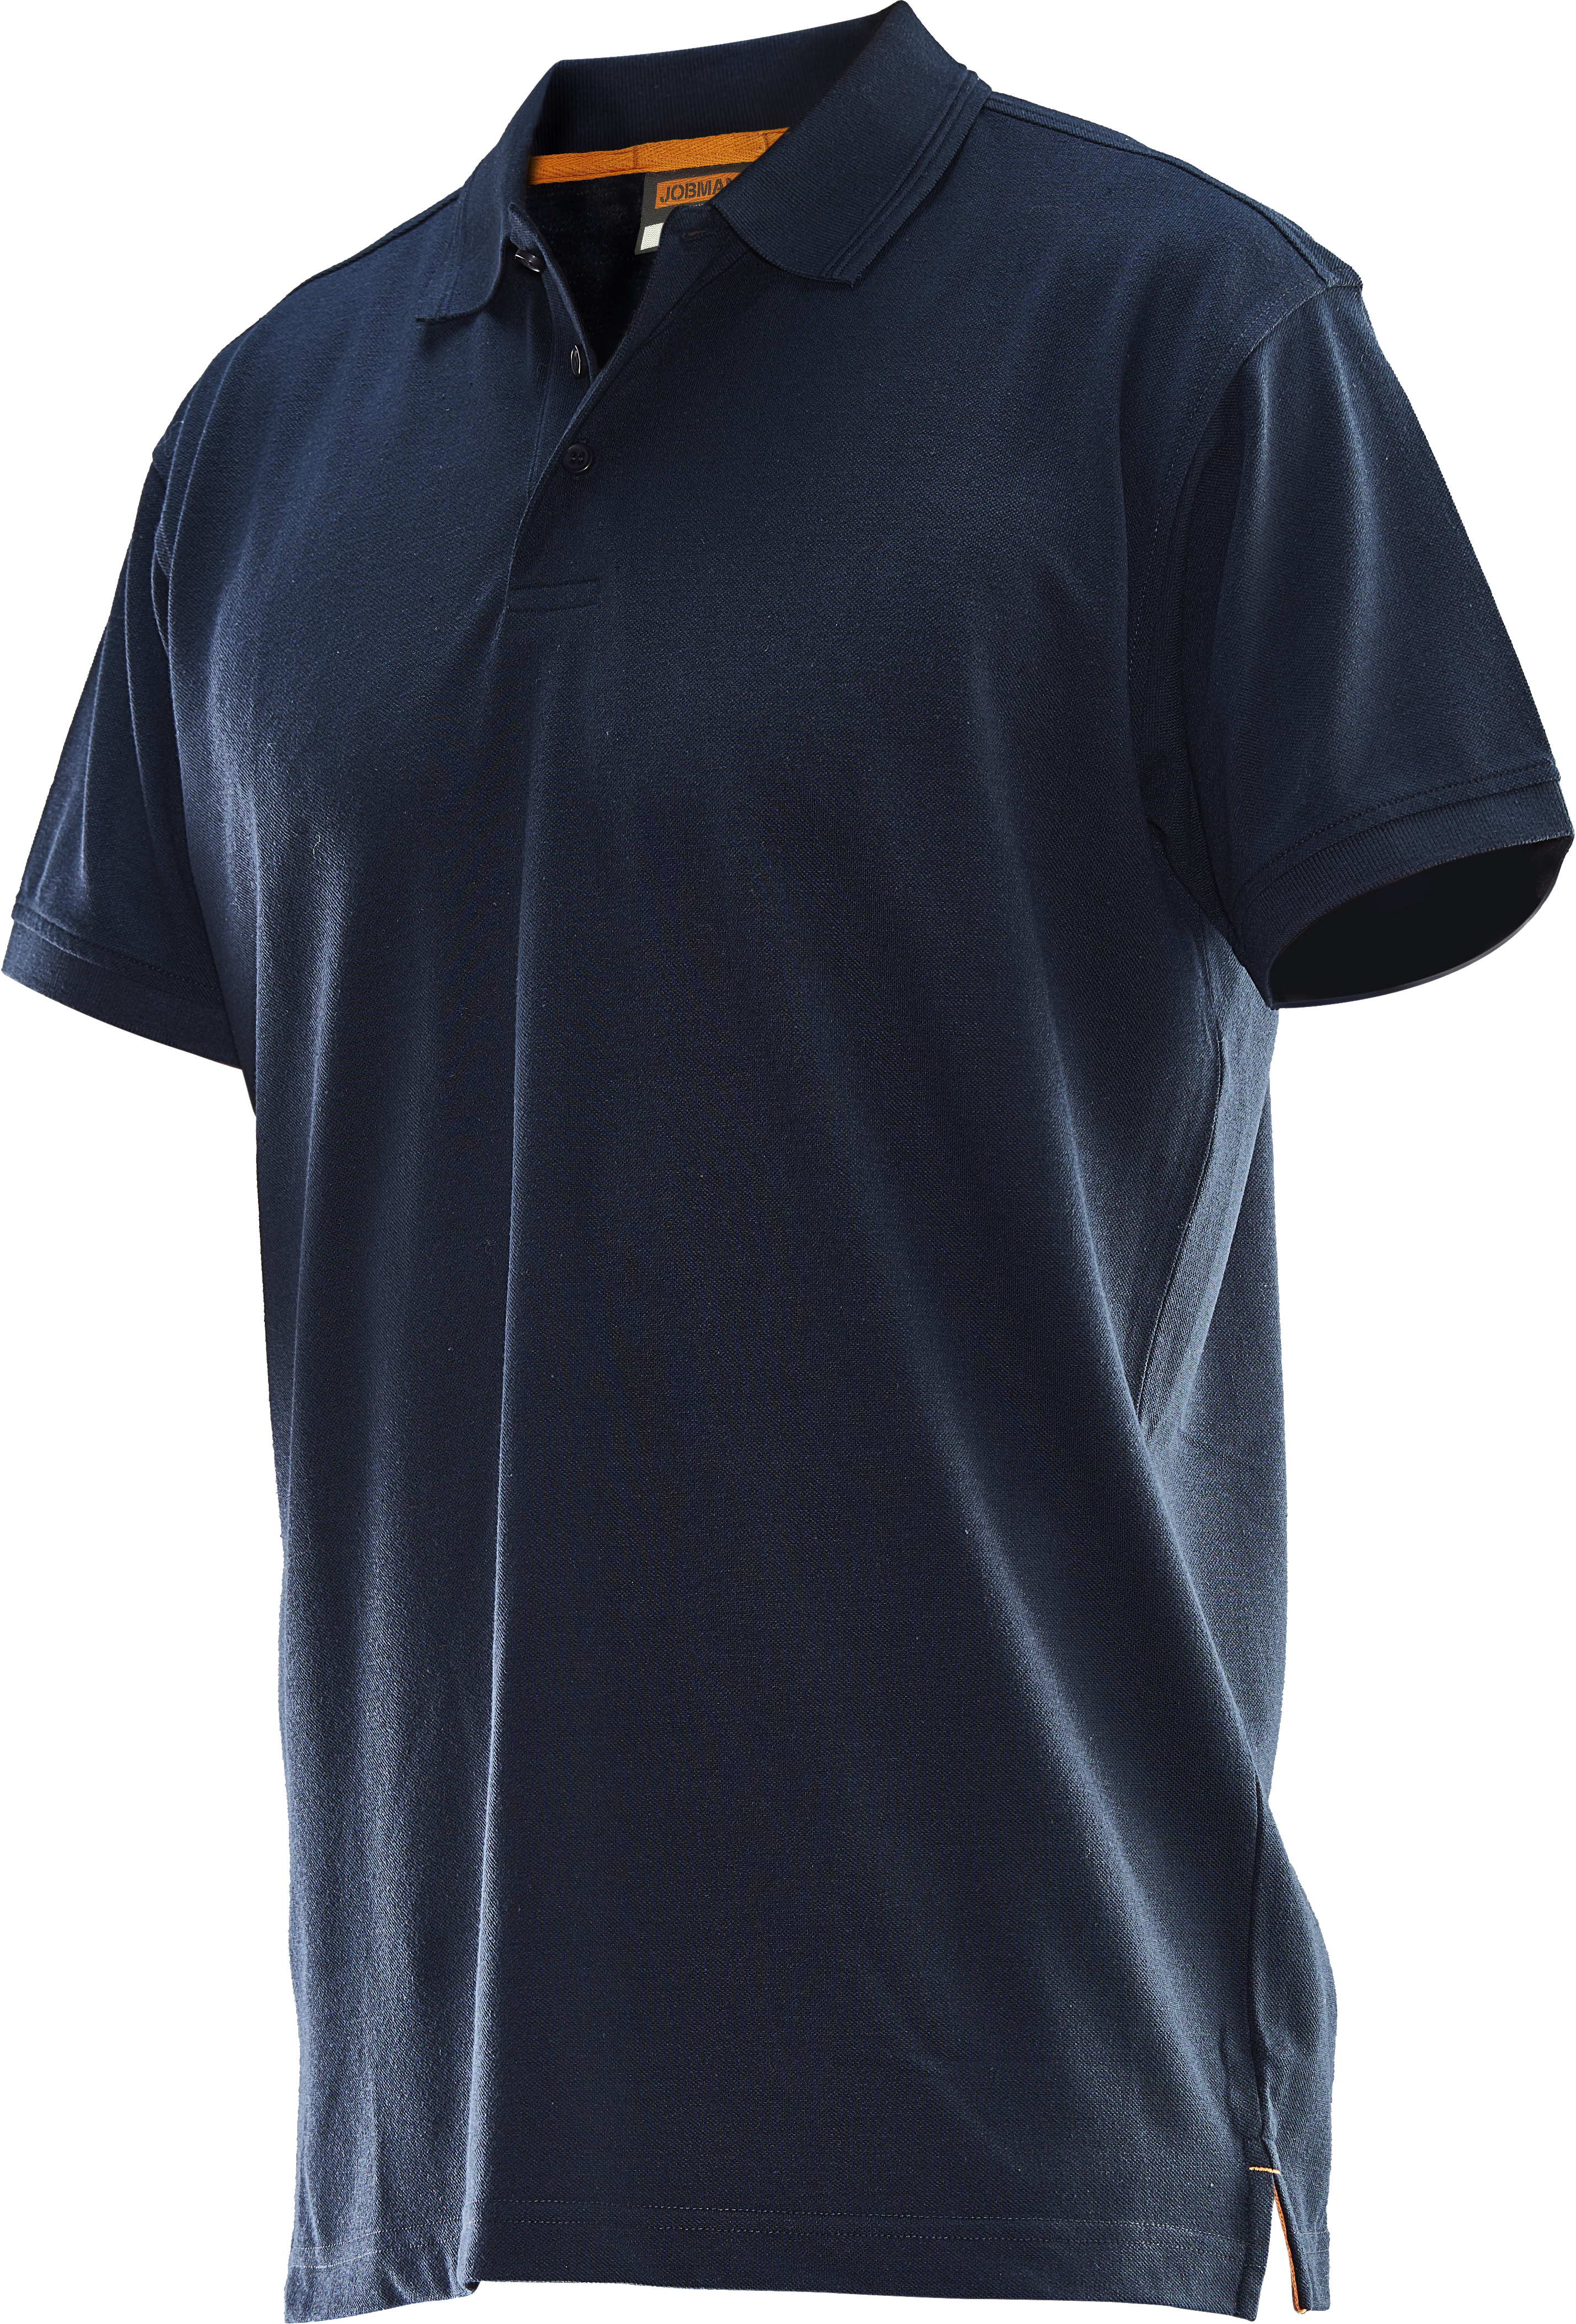 5564 T-shirt polo XS bleu marine